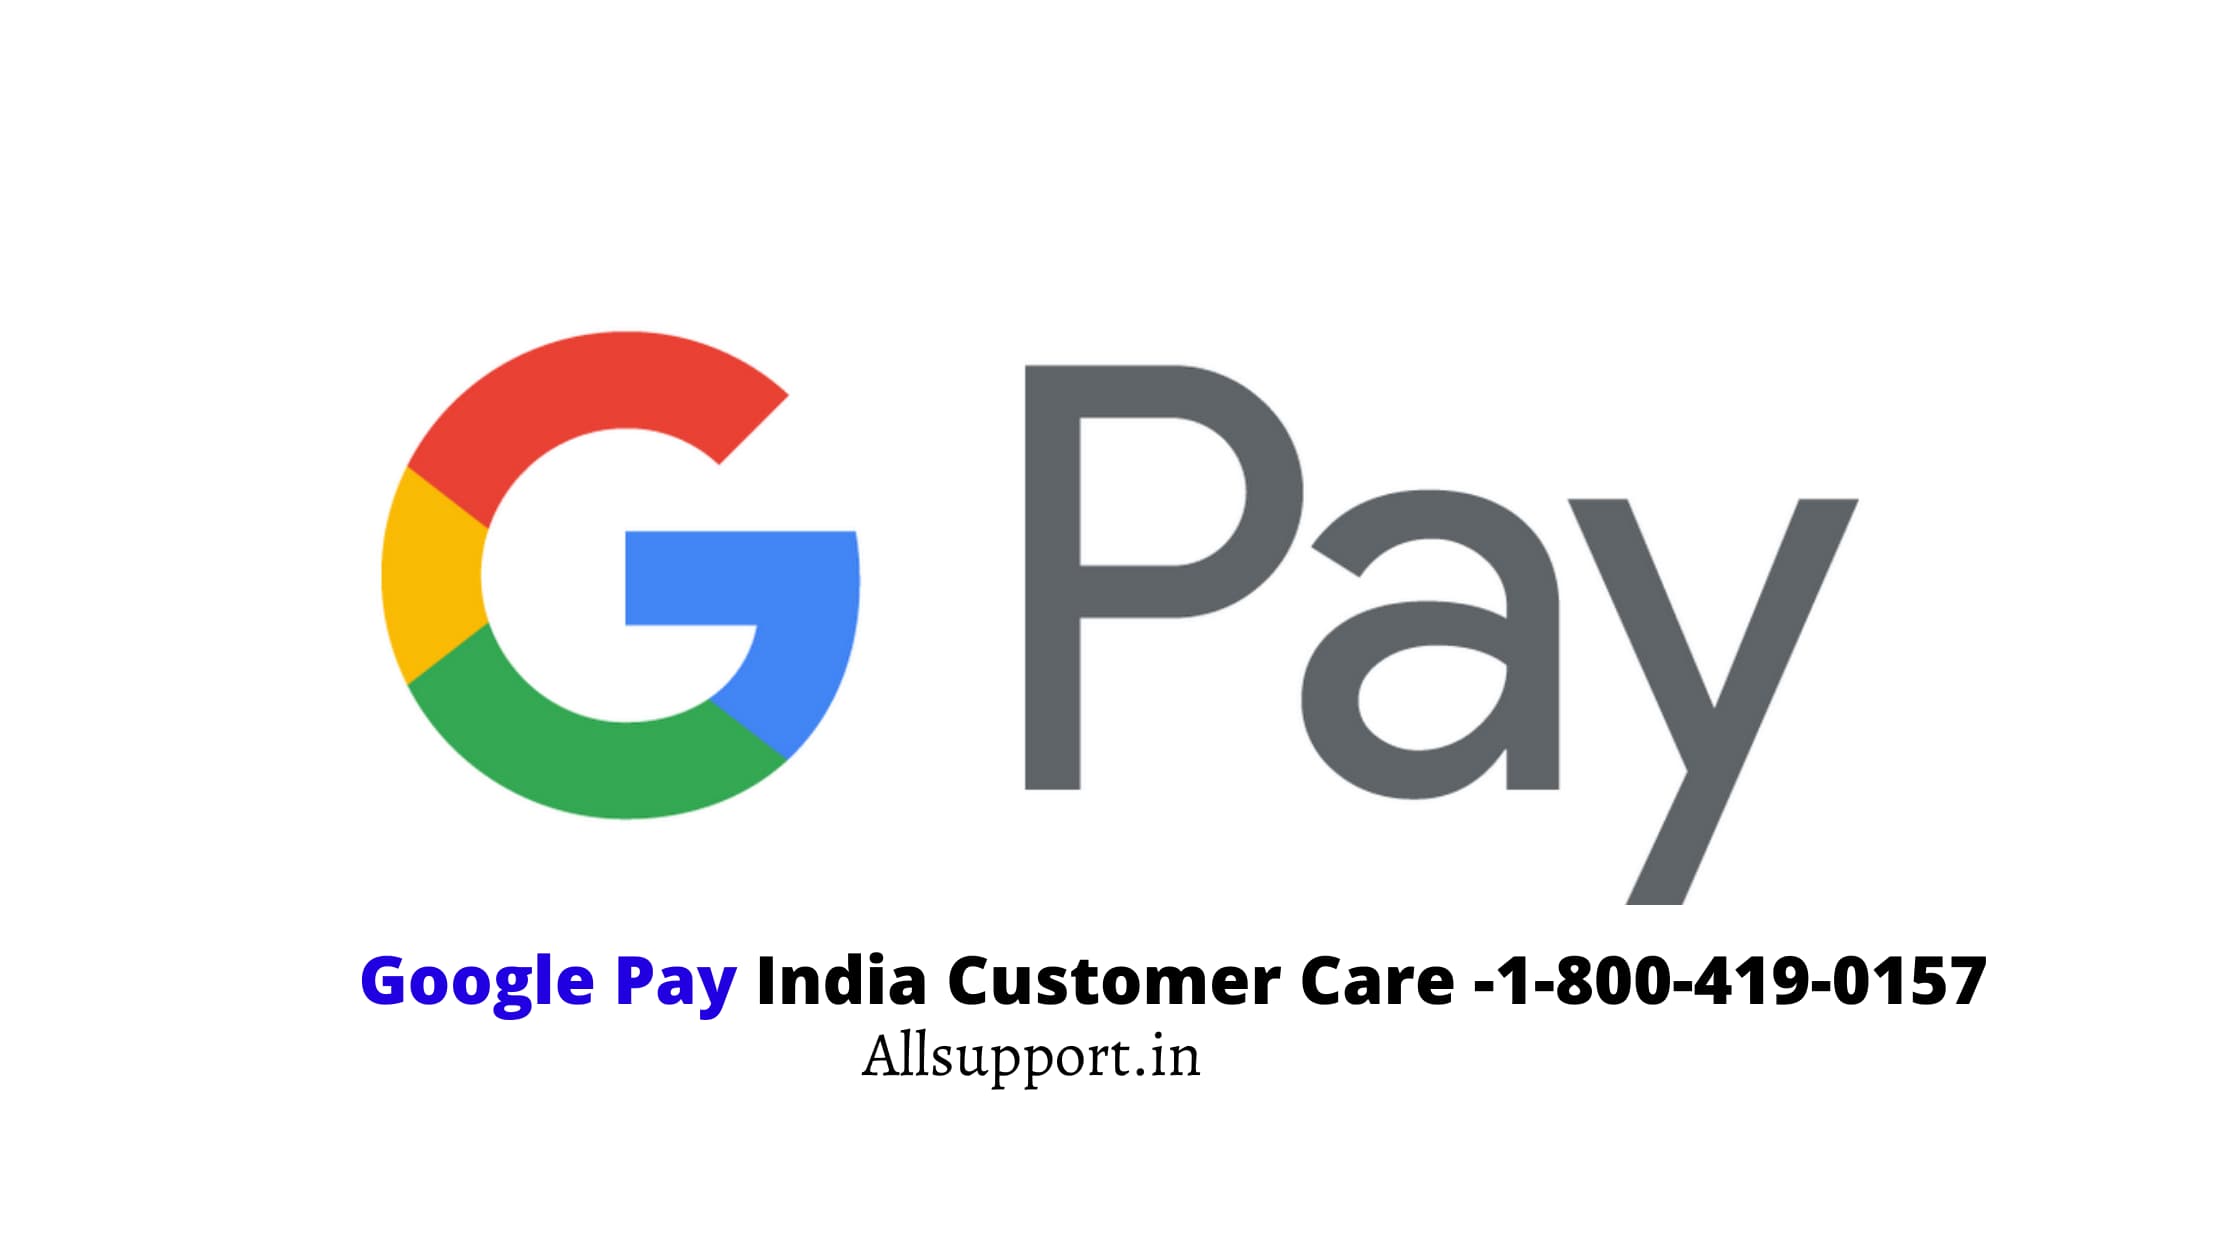 Google Pay India Customer Care -1-800-419-0157 (1)